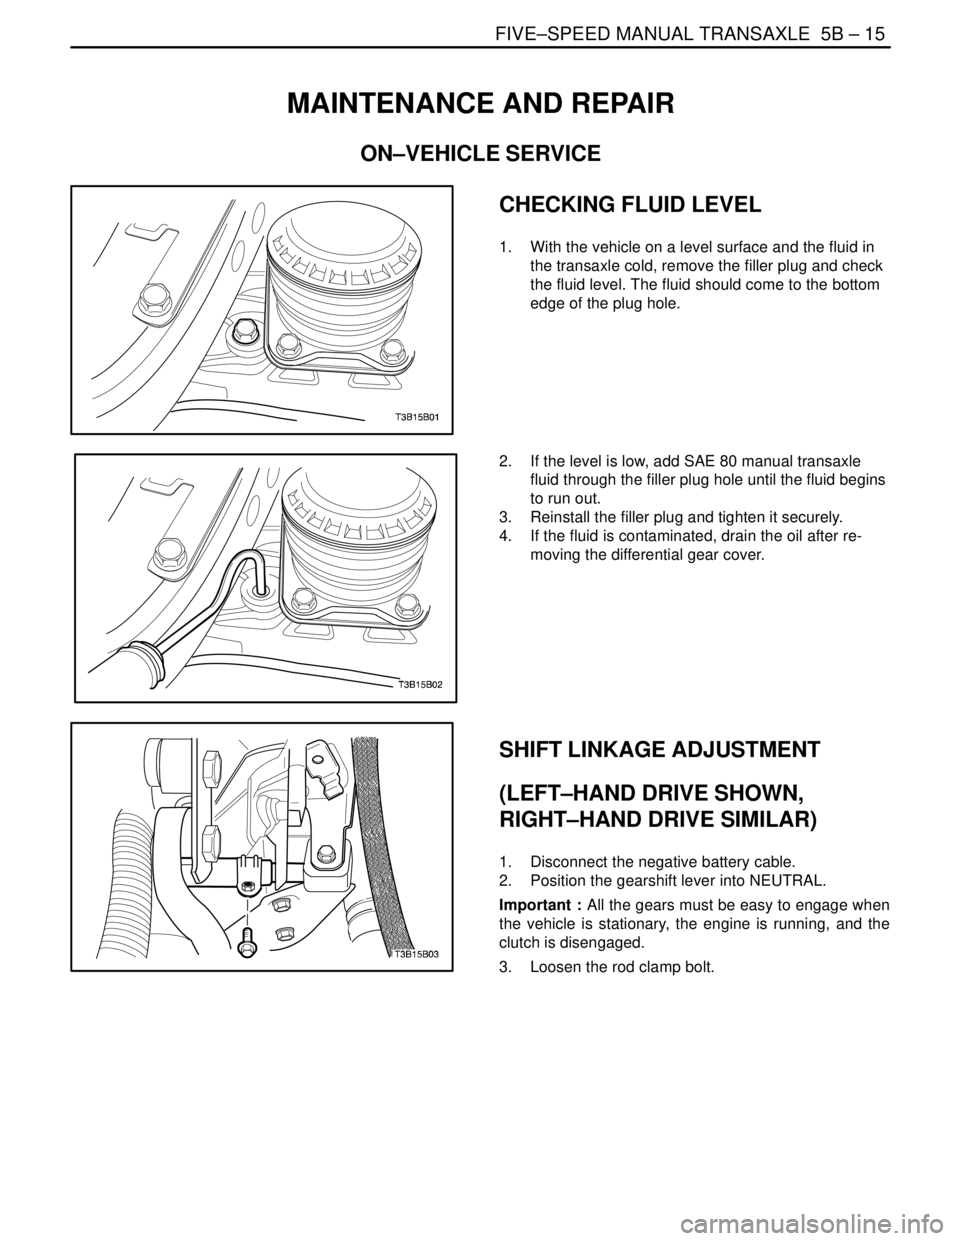 DAEWOO NUBIRA 2004  Service Repair Manual FIVE–SPEED MANUAL TRANSAXLE  5B – 15
DAEWOO V–121 BL4
MAINTENANCE AND REPAIR
ON–VEHICLE SERVICE
CHECKING FLUID LEVEL
1.  With the vehicle on a level surface and the fluid in
the transaxle cold